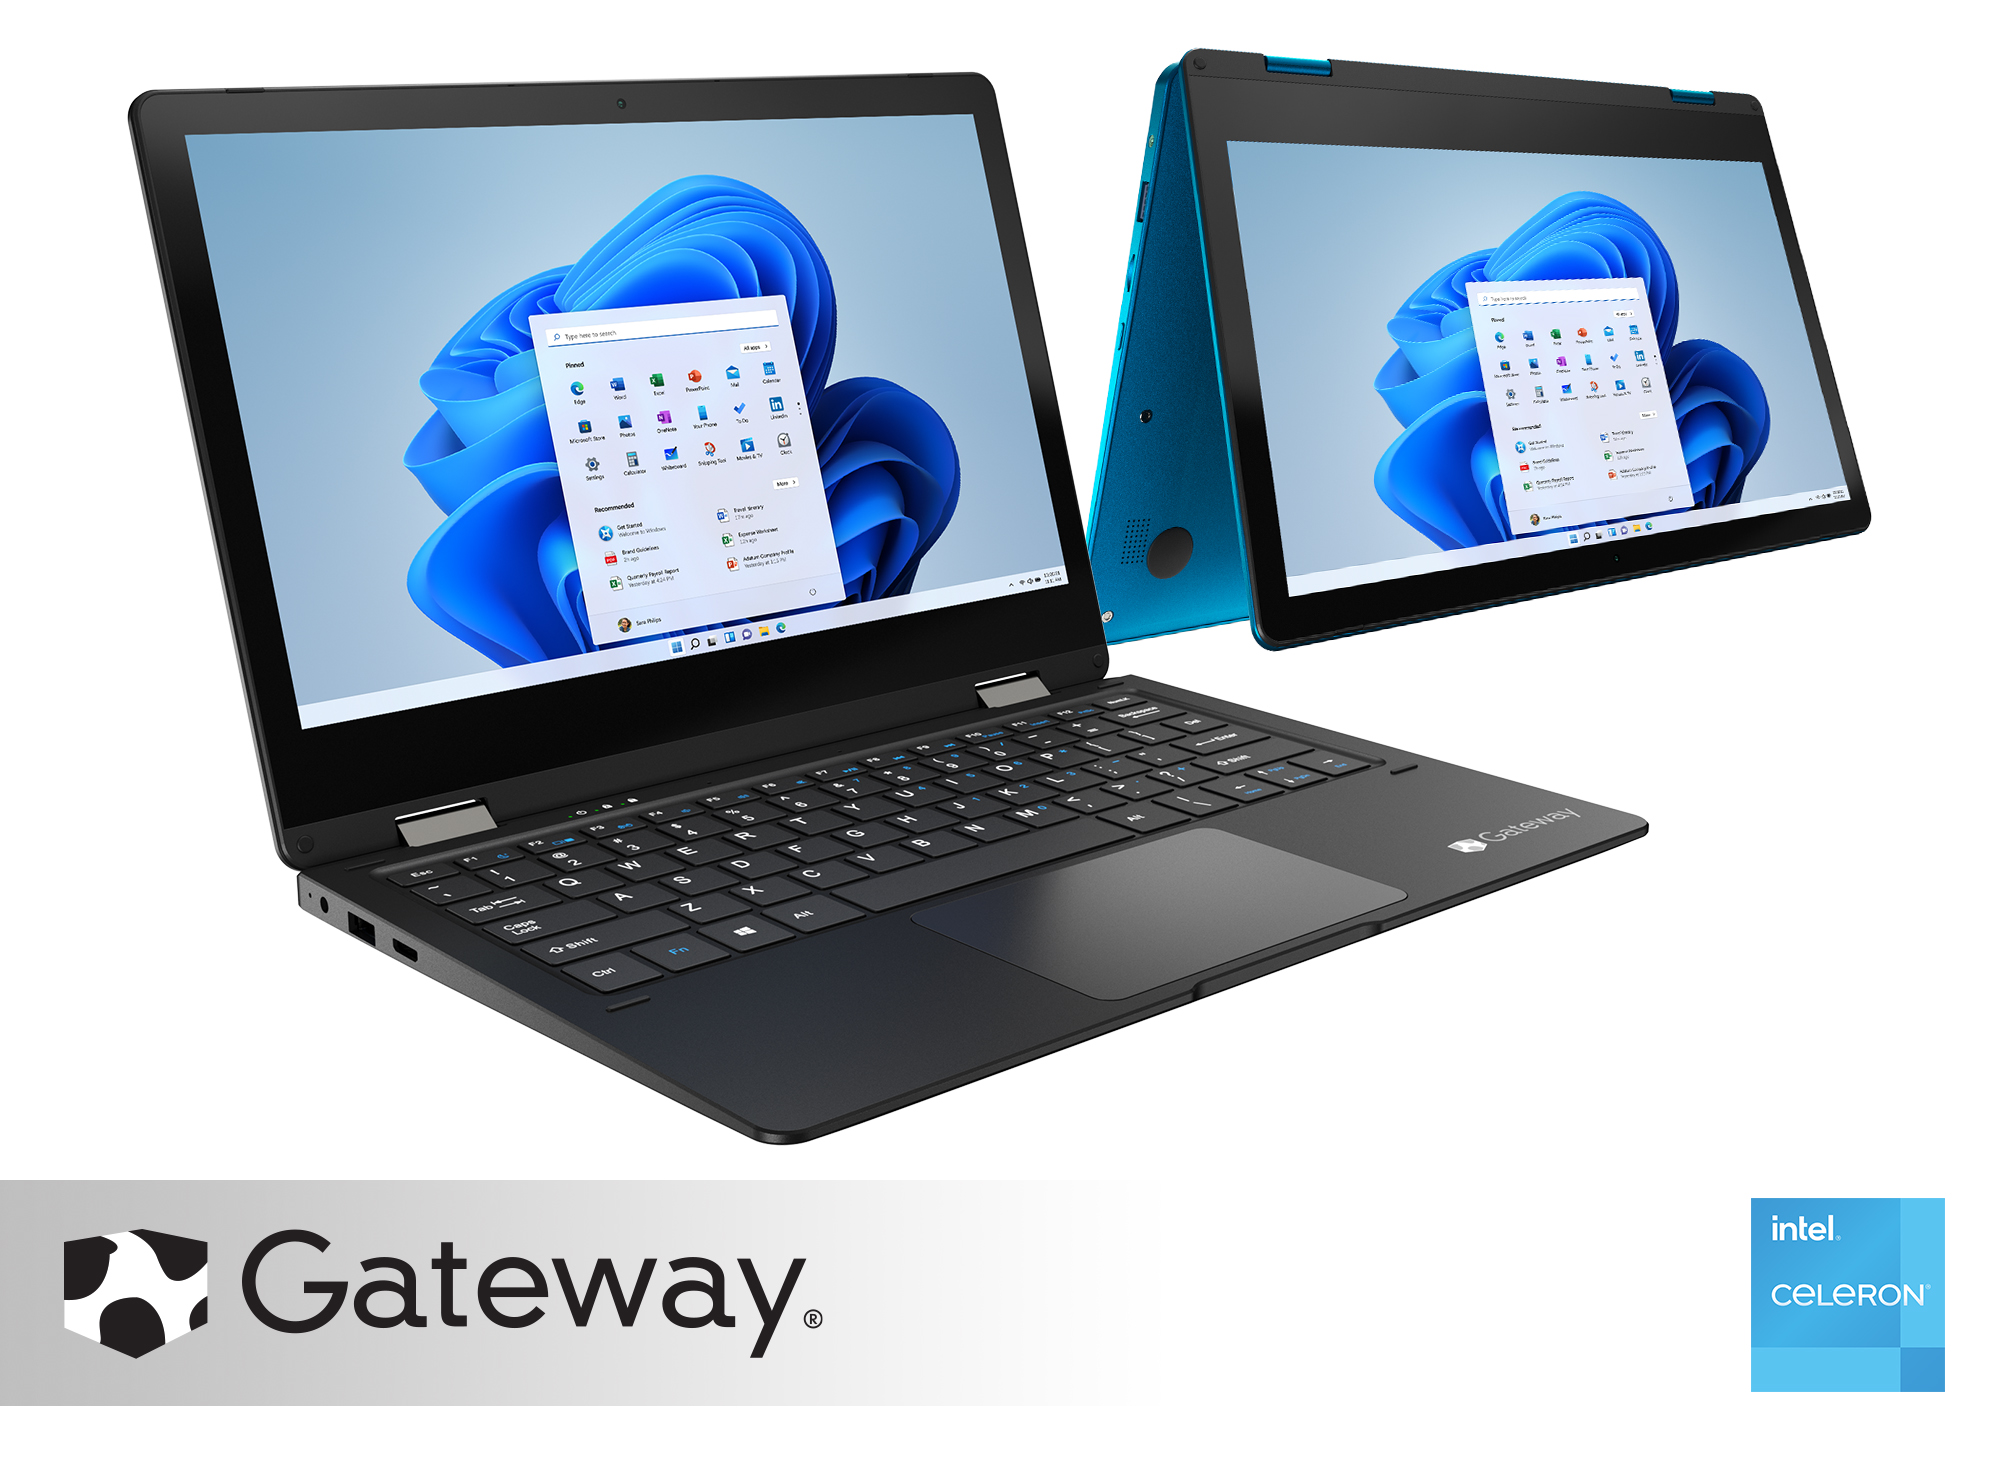 Gateway Notebook 11.6" Touchscreen 2-in-1s Laptop, Intel Celeron N4020, 4GB RAM, 64GB HD, Windows 10 Home, Blue, GWTC116-2BL - image 1 of 8